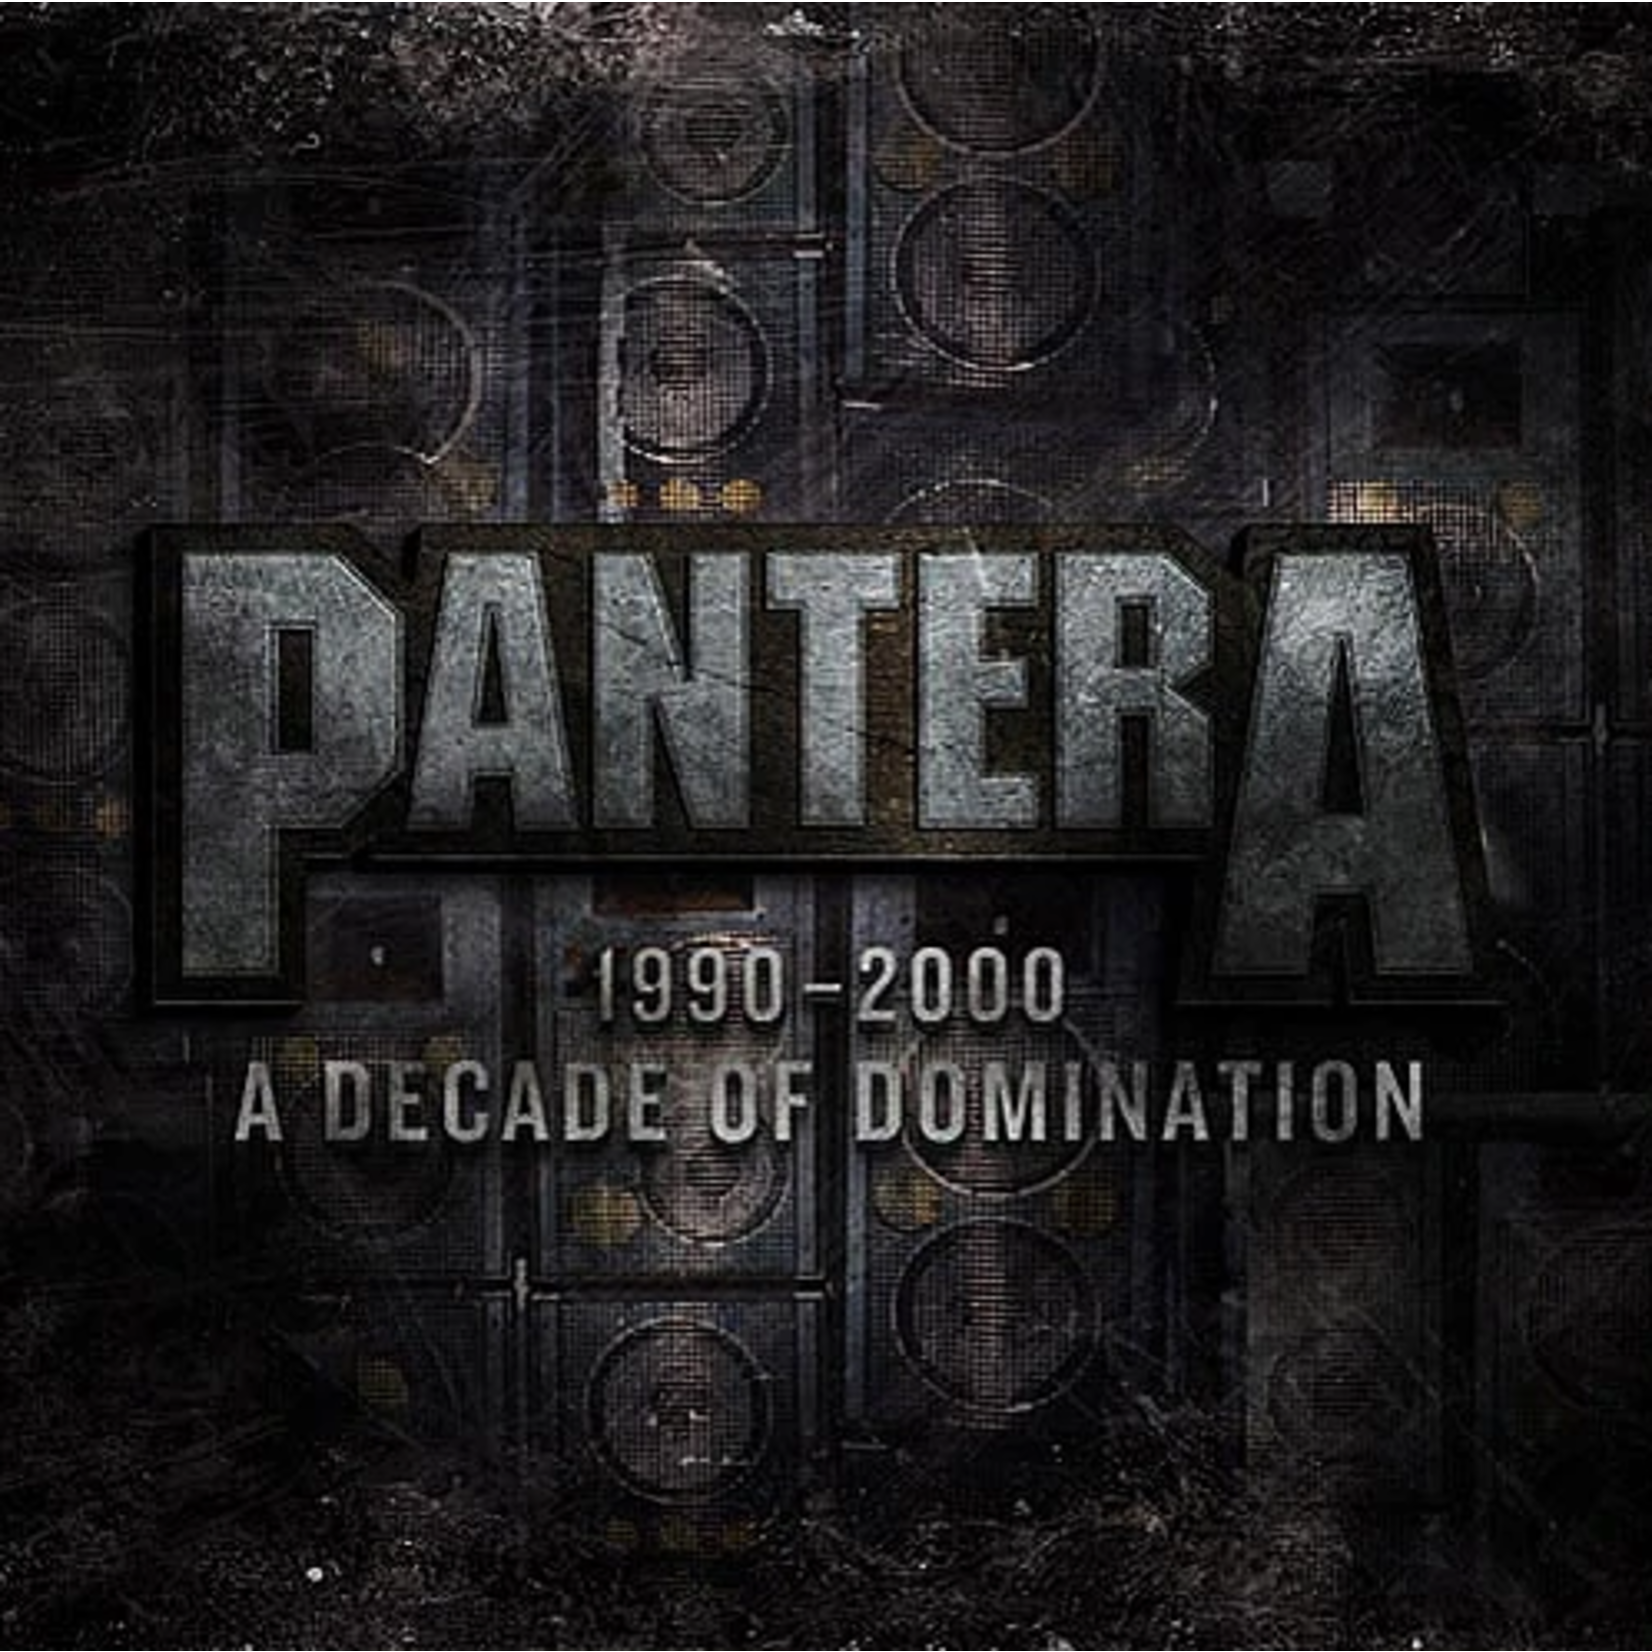 [New] Pantera - 1990-2000: A Decade of Domination (2LP, indie exclusive, black ice vinyl)